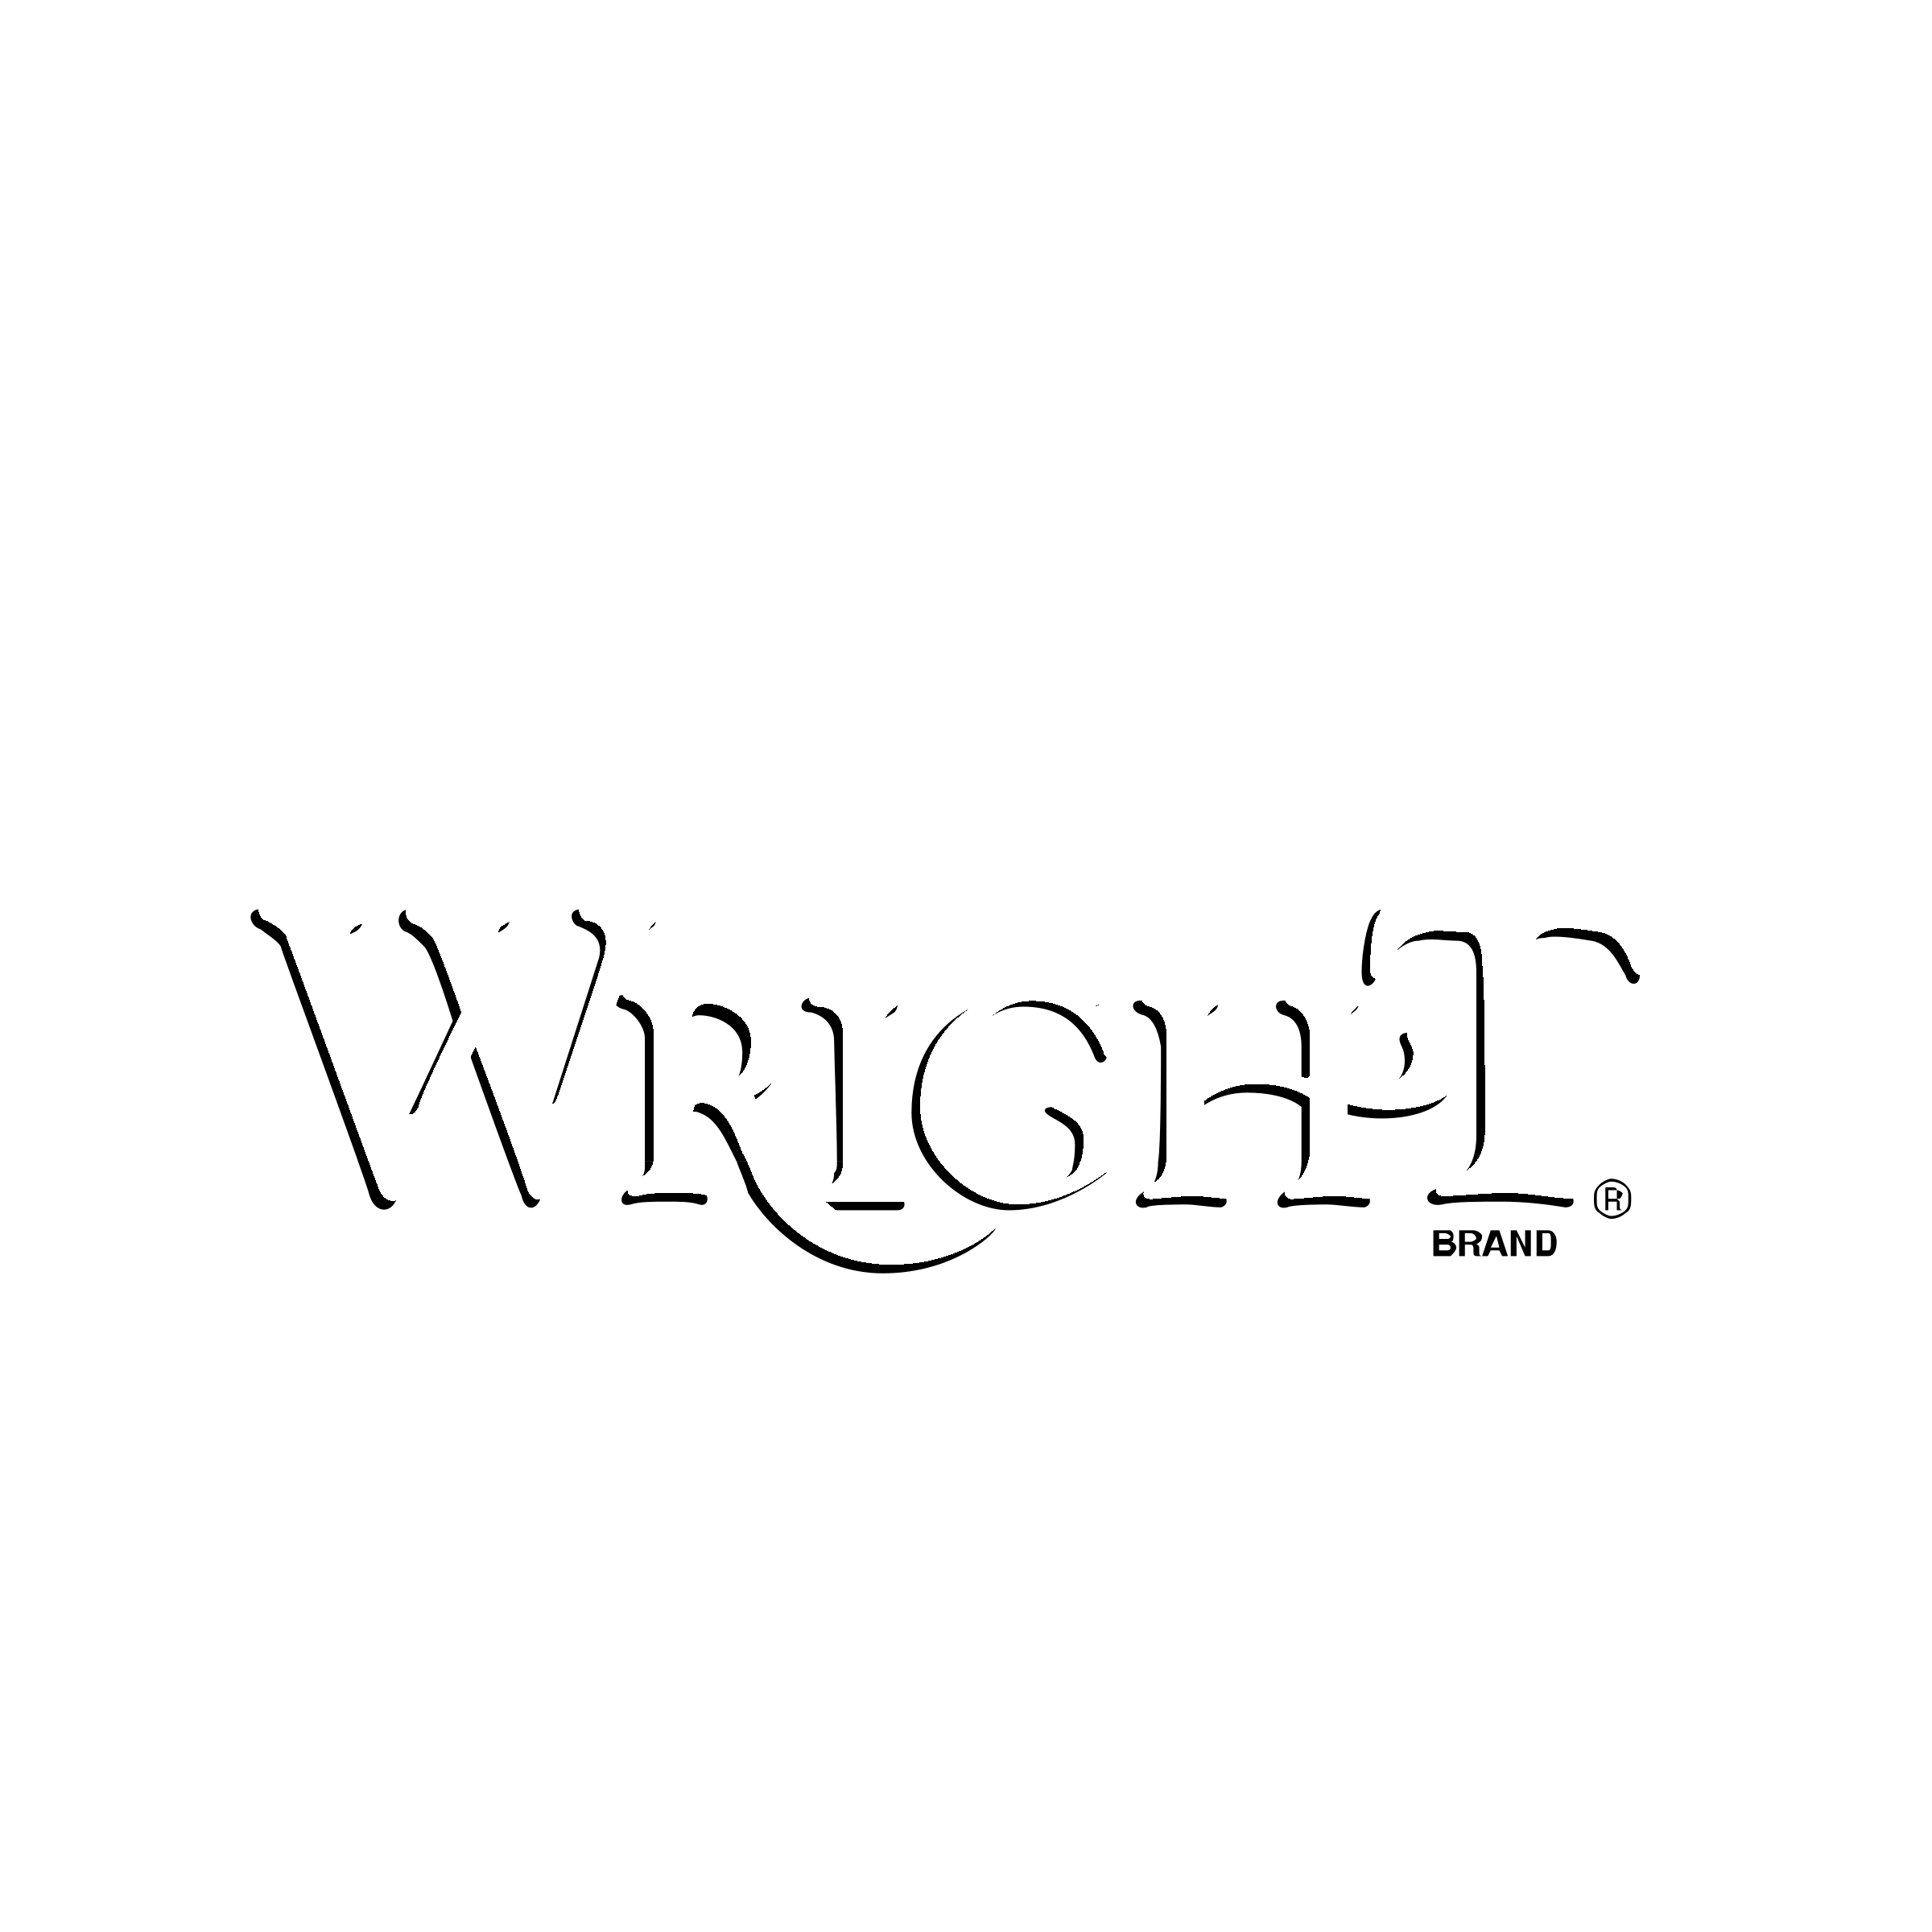 Wright Logo - Wright Logo PNG Transparent & SVG Vector